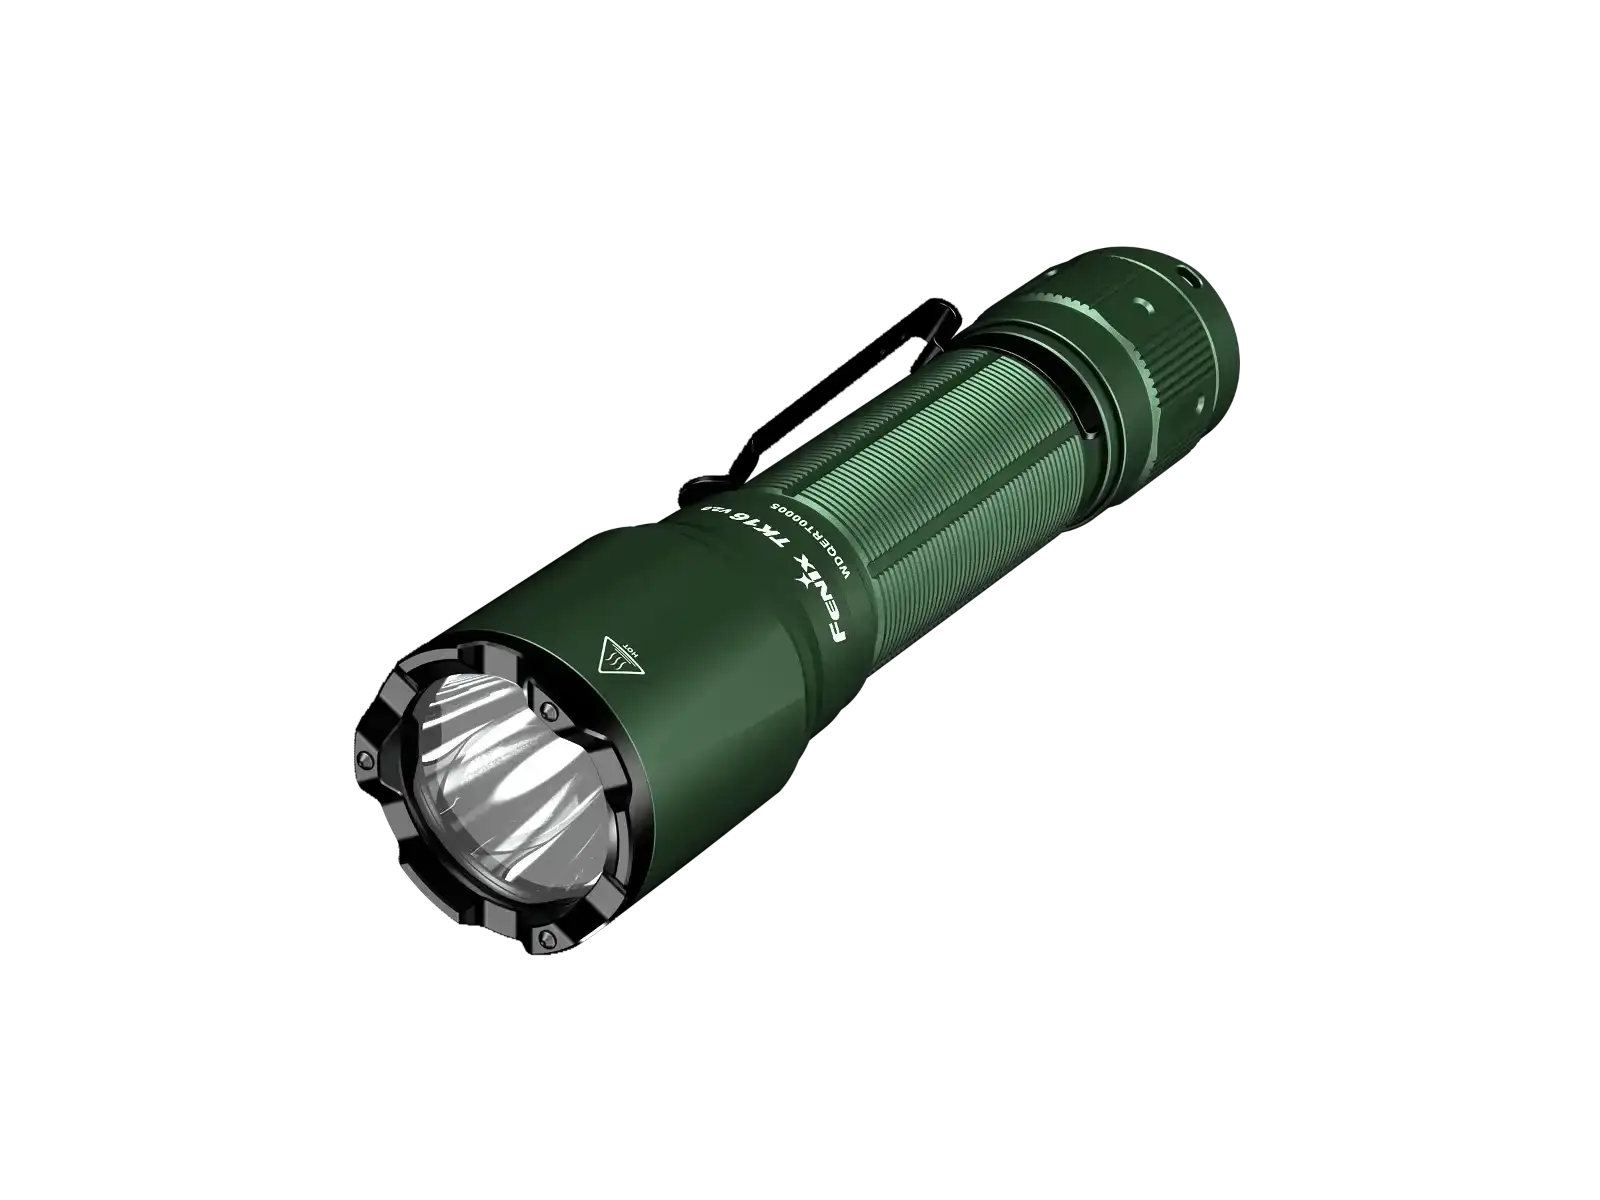 Image of Fenix TK16 V2.0 Tactical Flashlight - 3100 Lumens